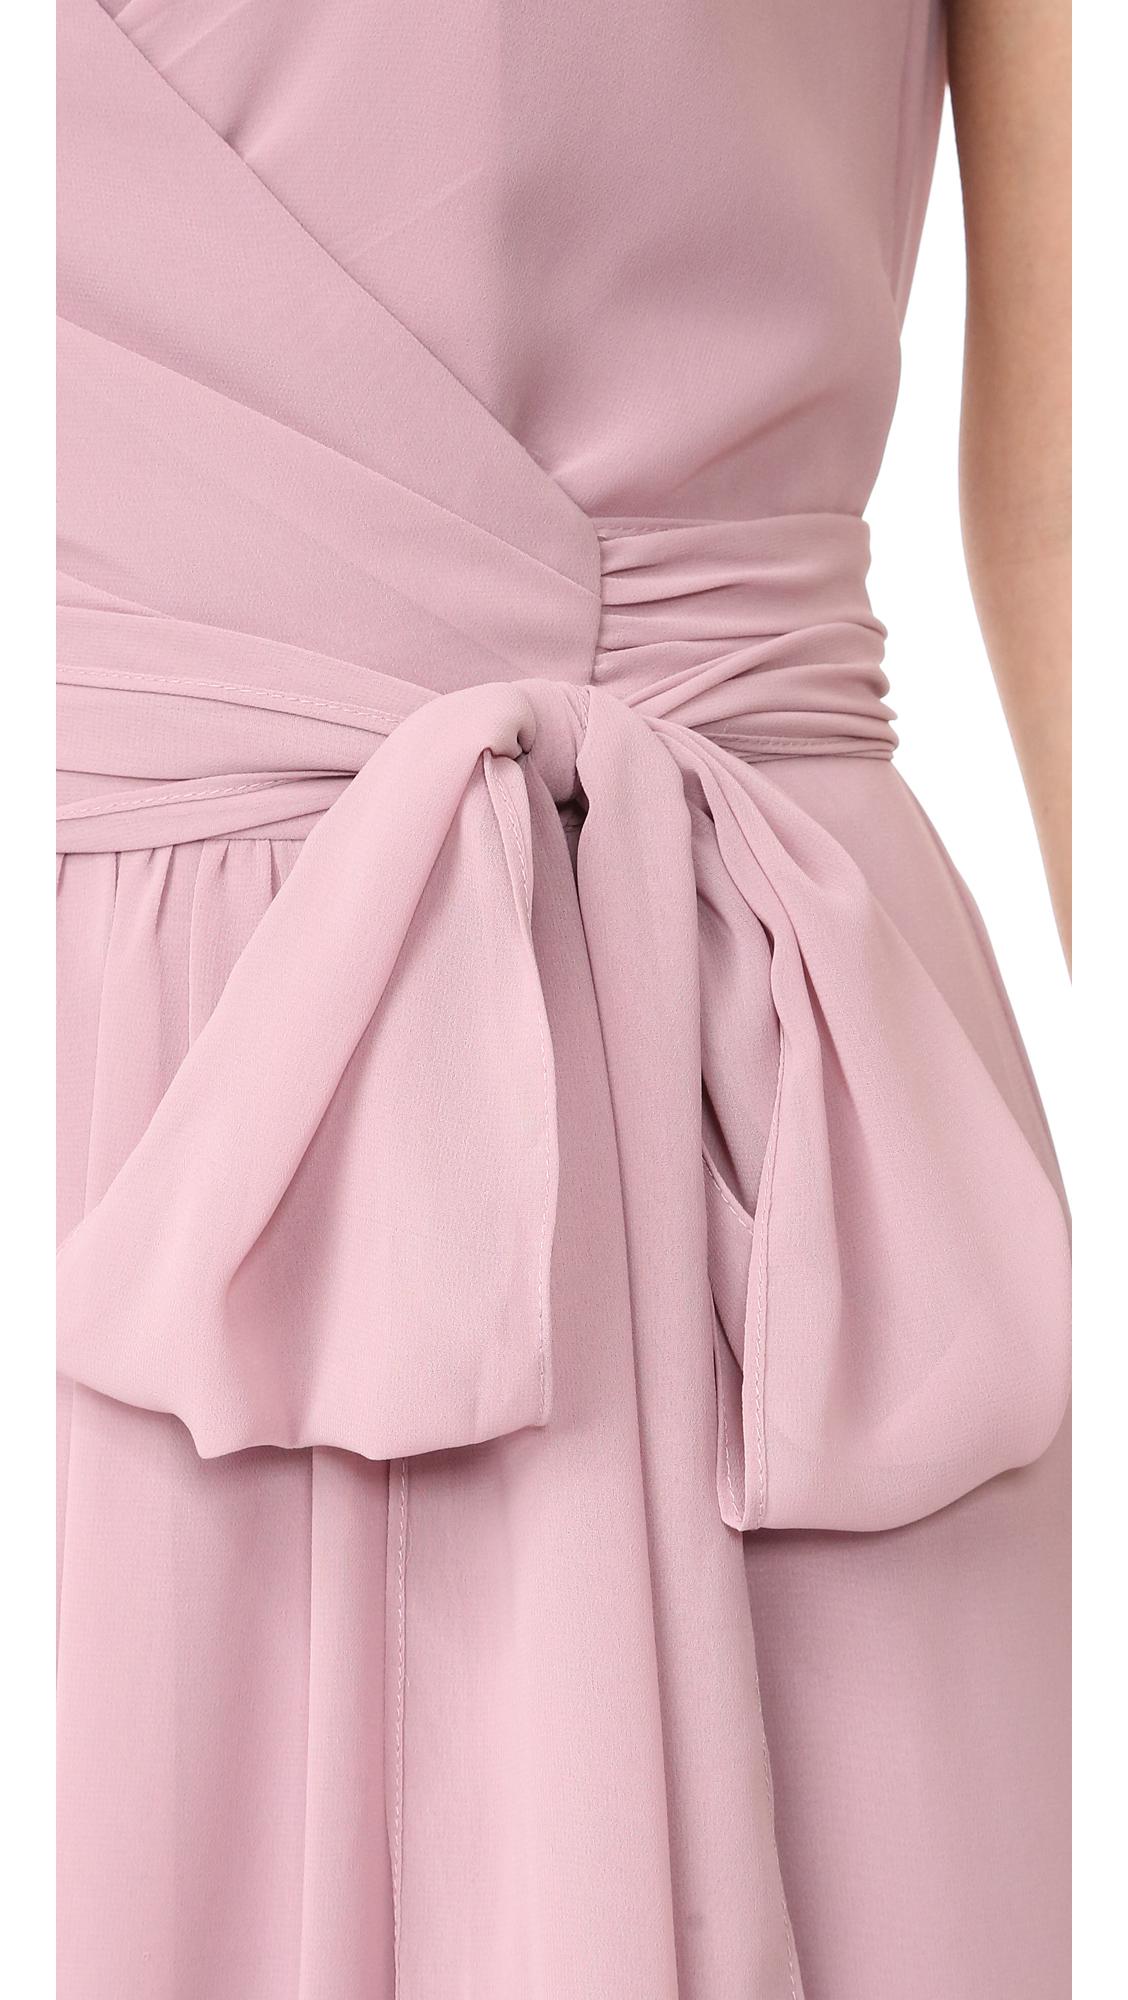 Lyst - Joanna August Newbury Cap Sleeve Wrap Dress in Pink